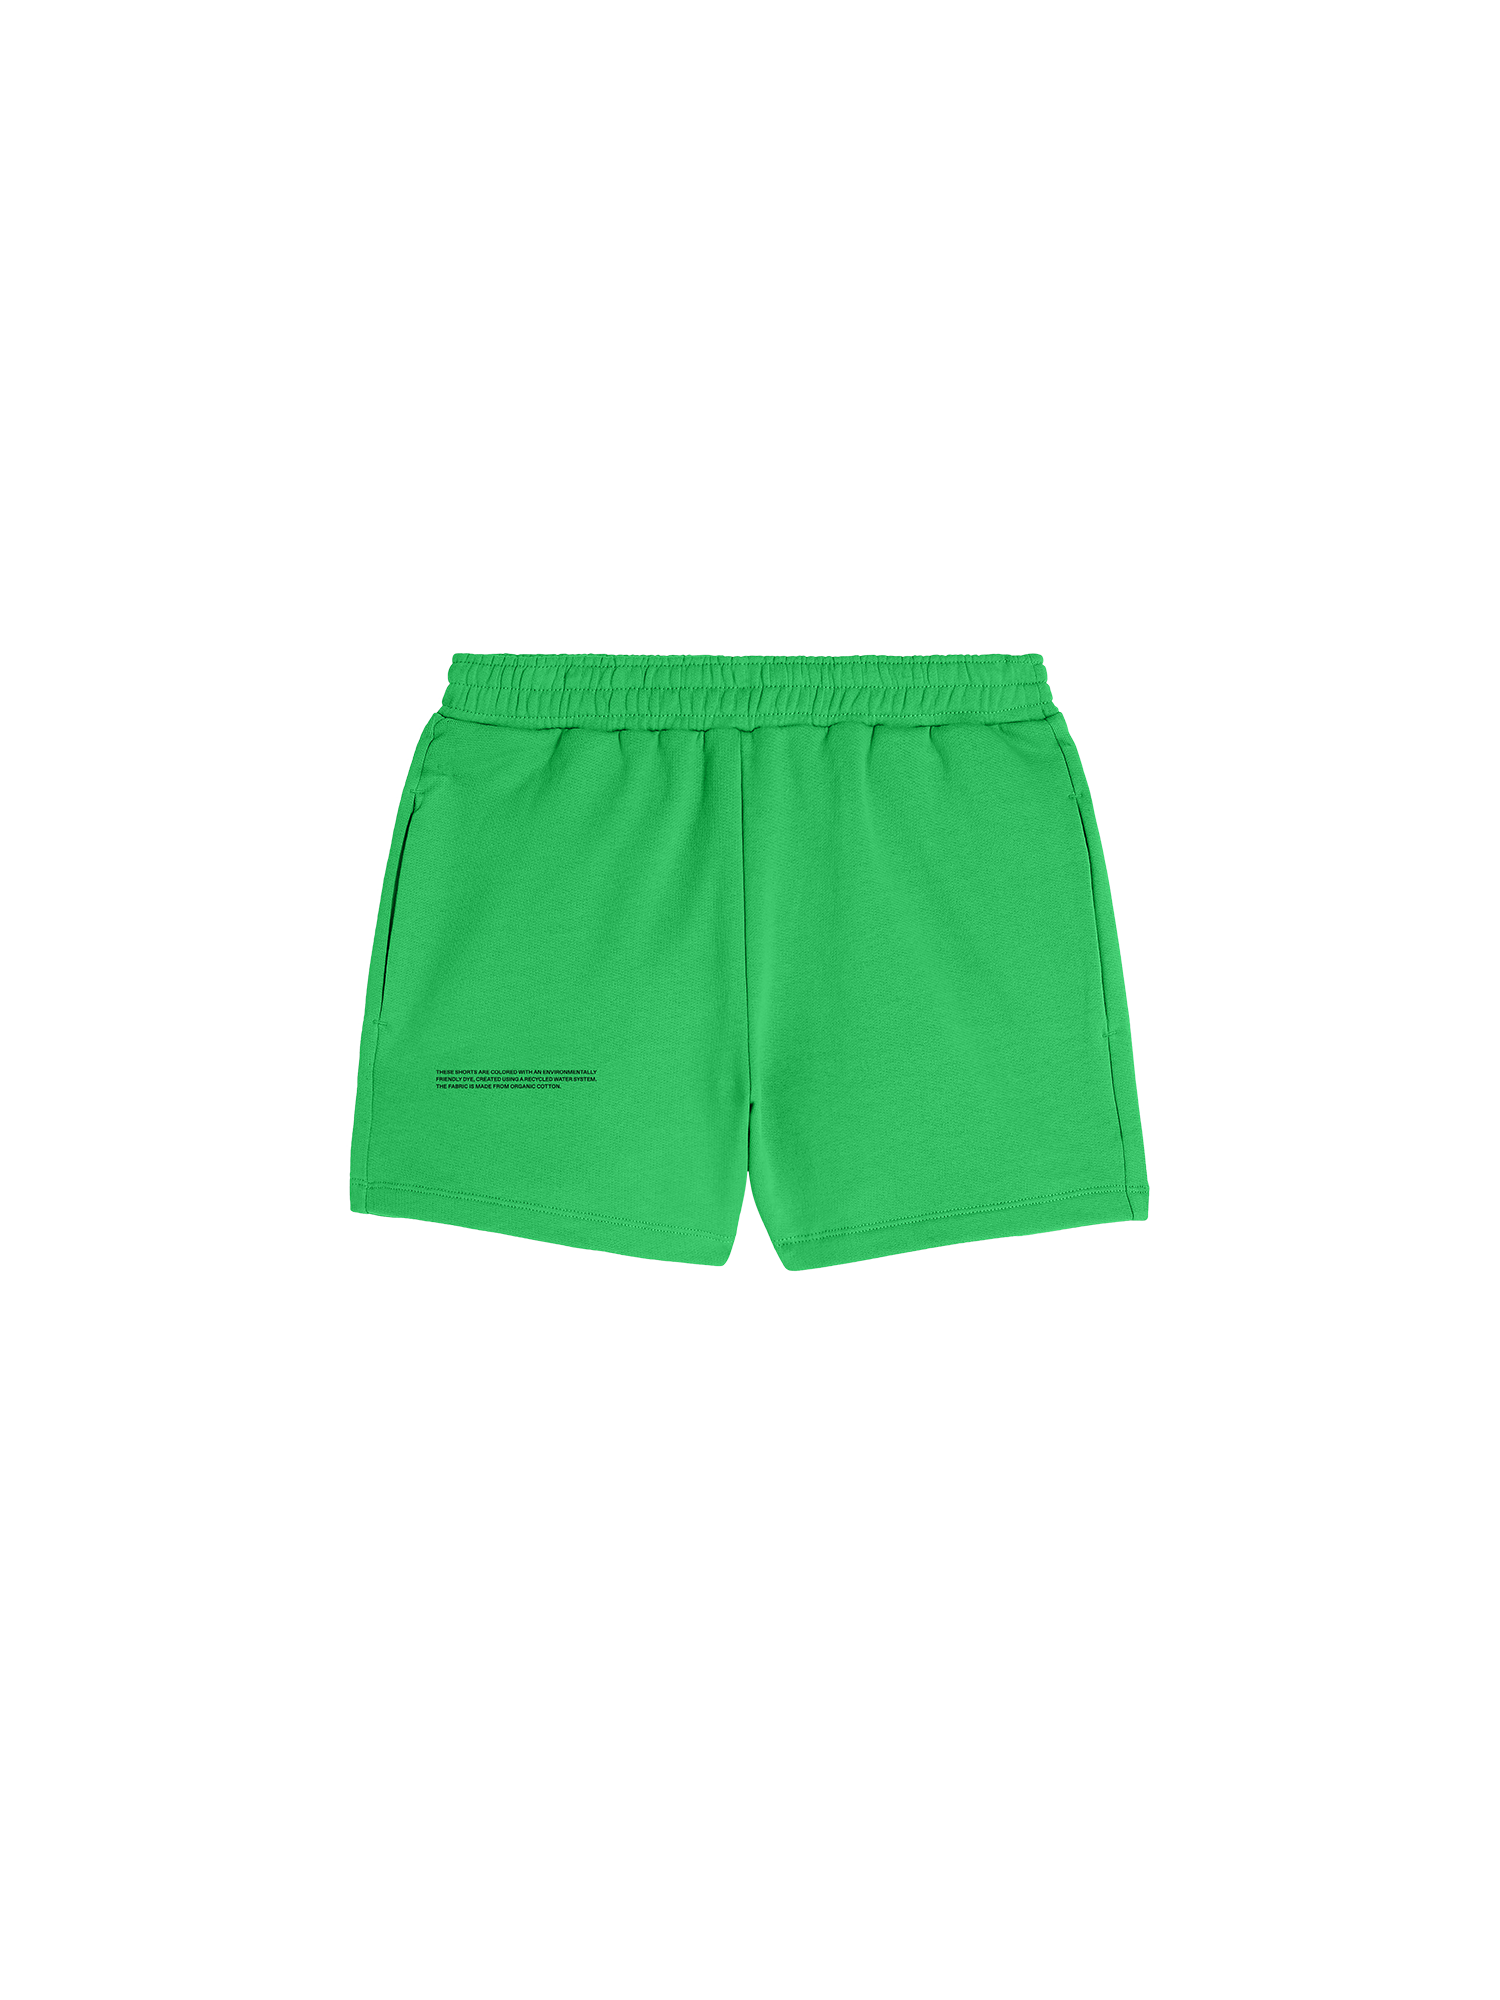 365 Midweight Shorts - Jade Green - Pangaia